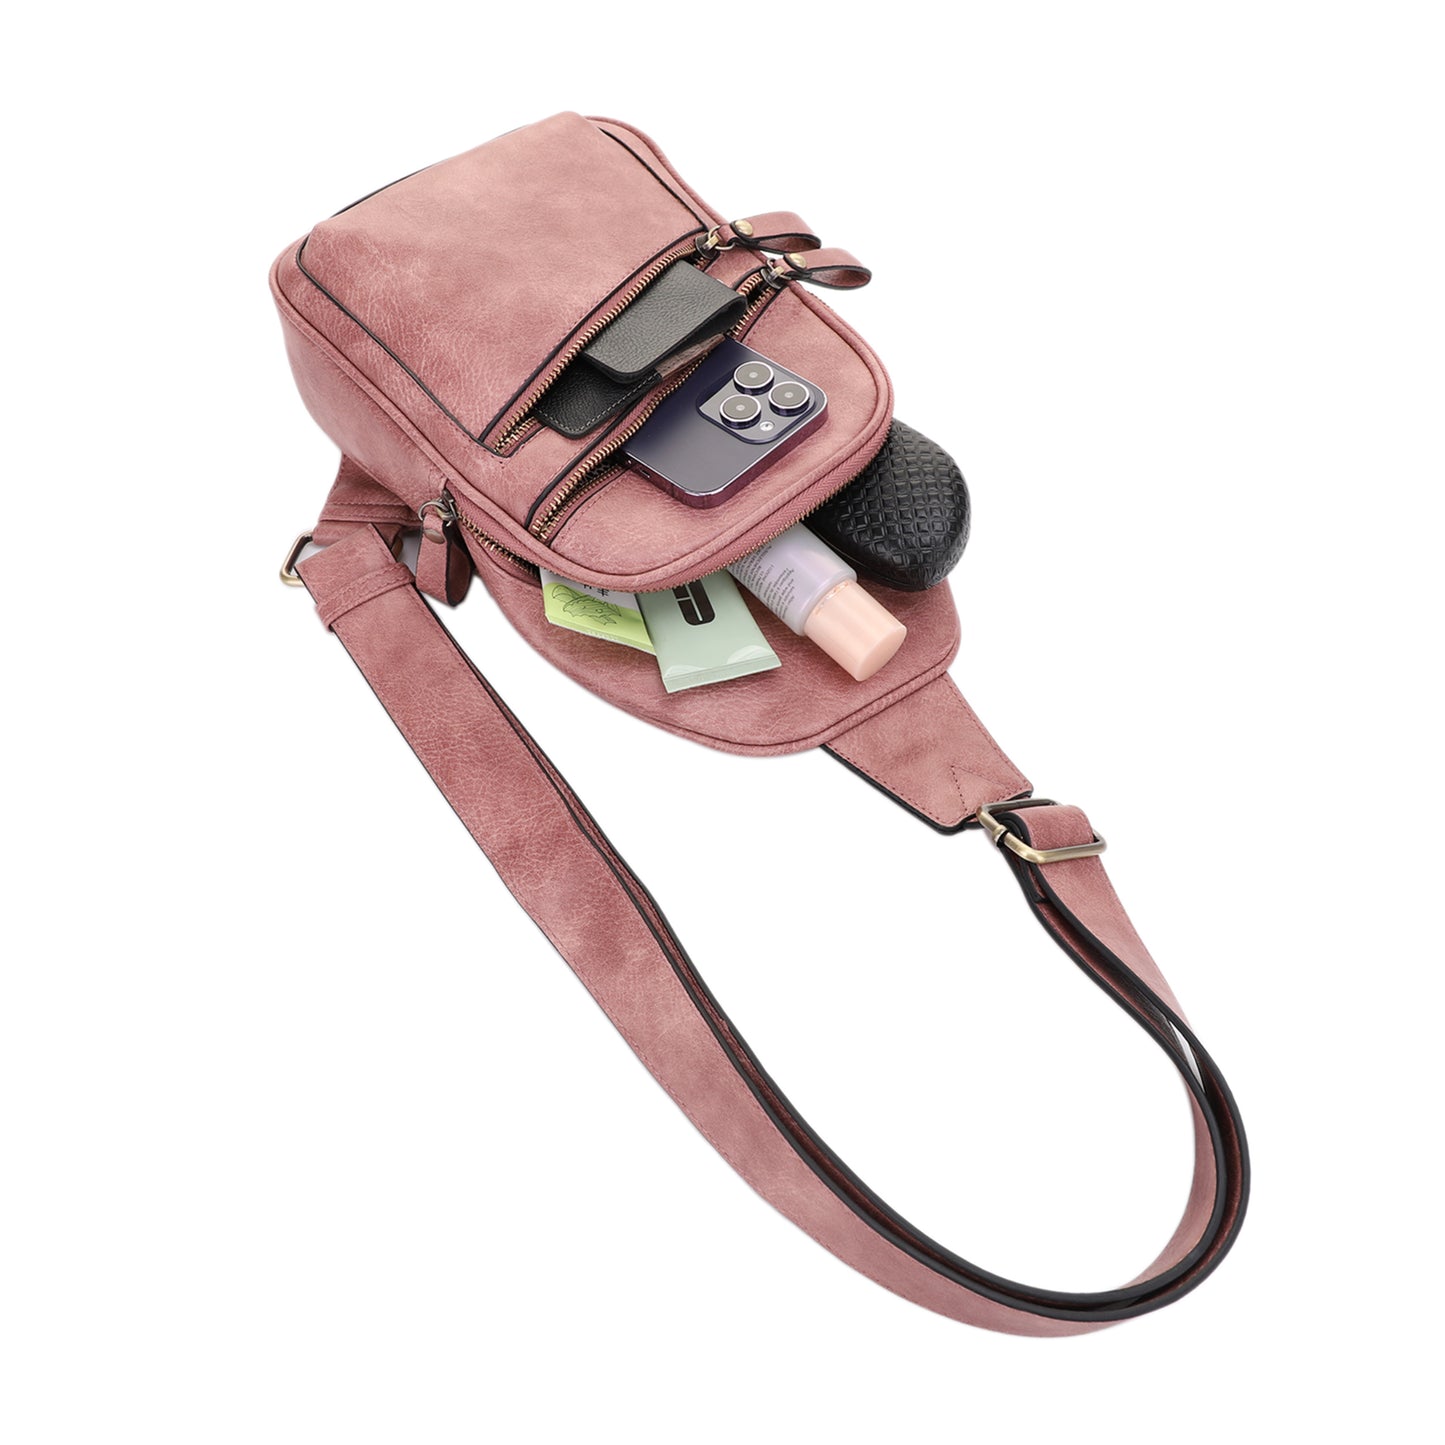 Jeannie Concealed Carry Lock and Key Sling Shoulder Backpack